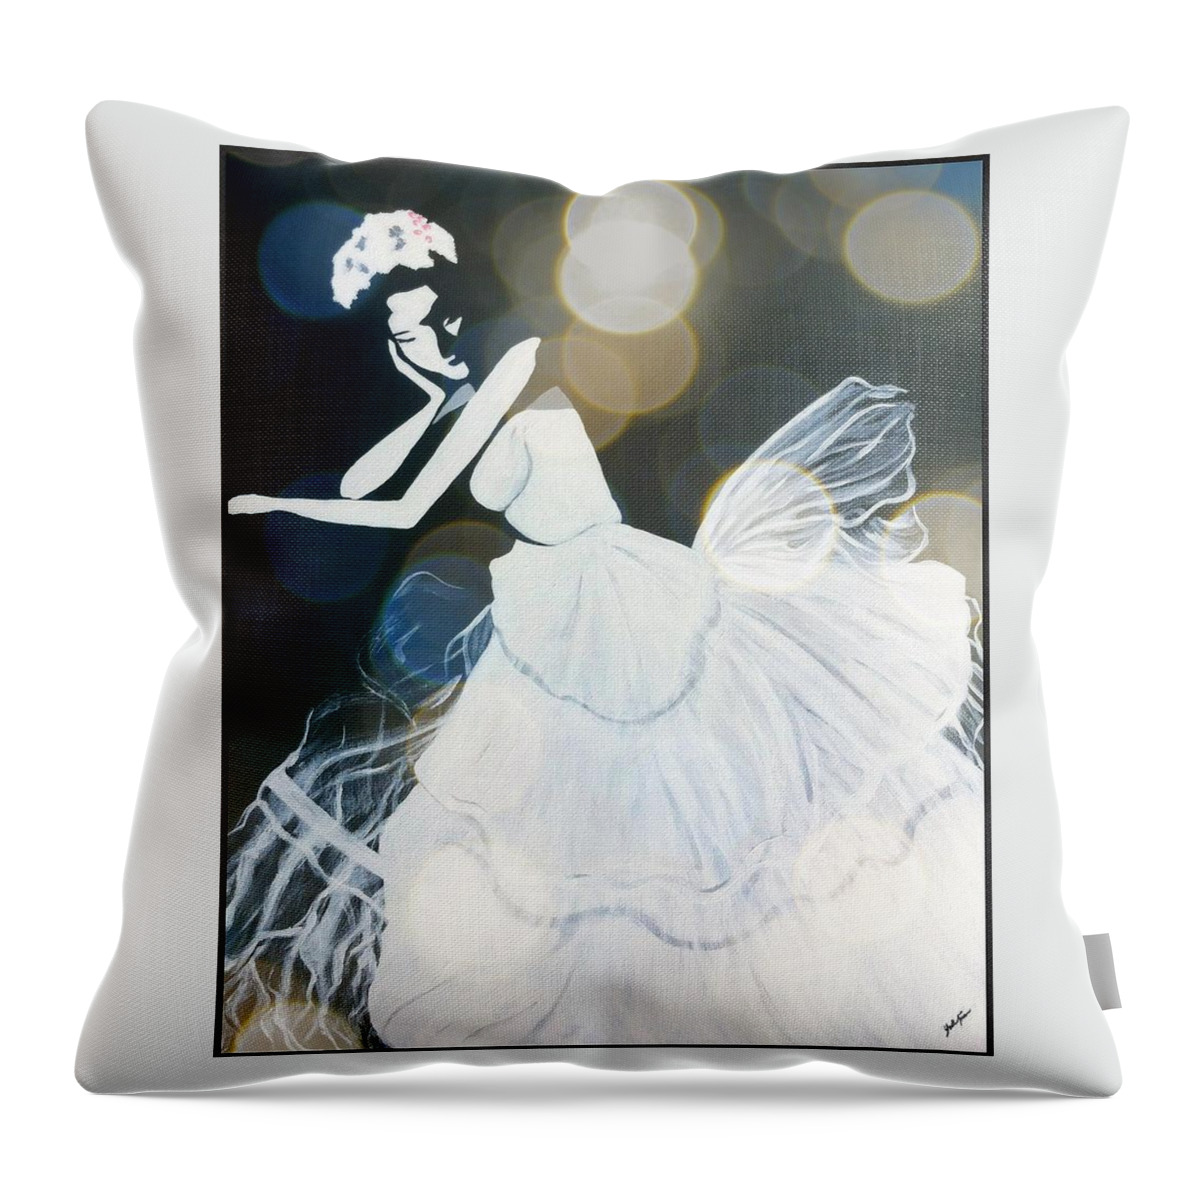 Black Throw Pillow featuring the digital art Spotlight on Elvira by Yolanda Holmon